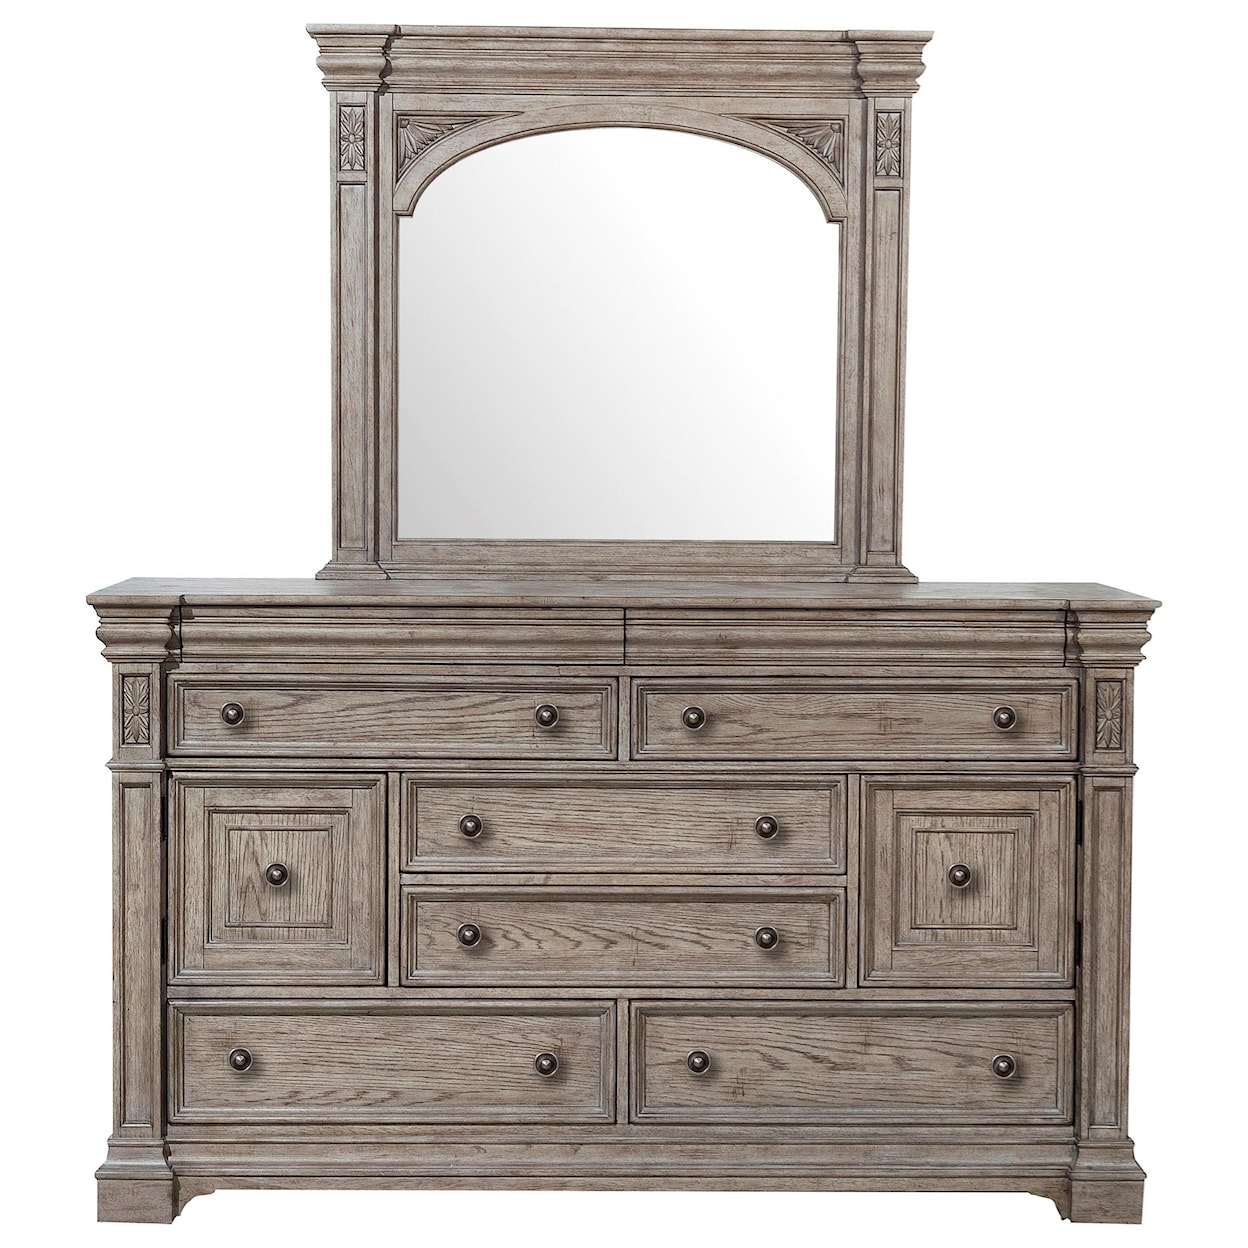 Pulaski Furniture Kingsbury Mirror